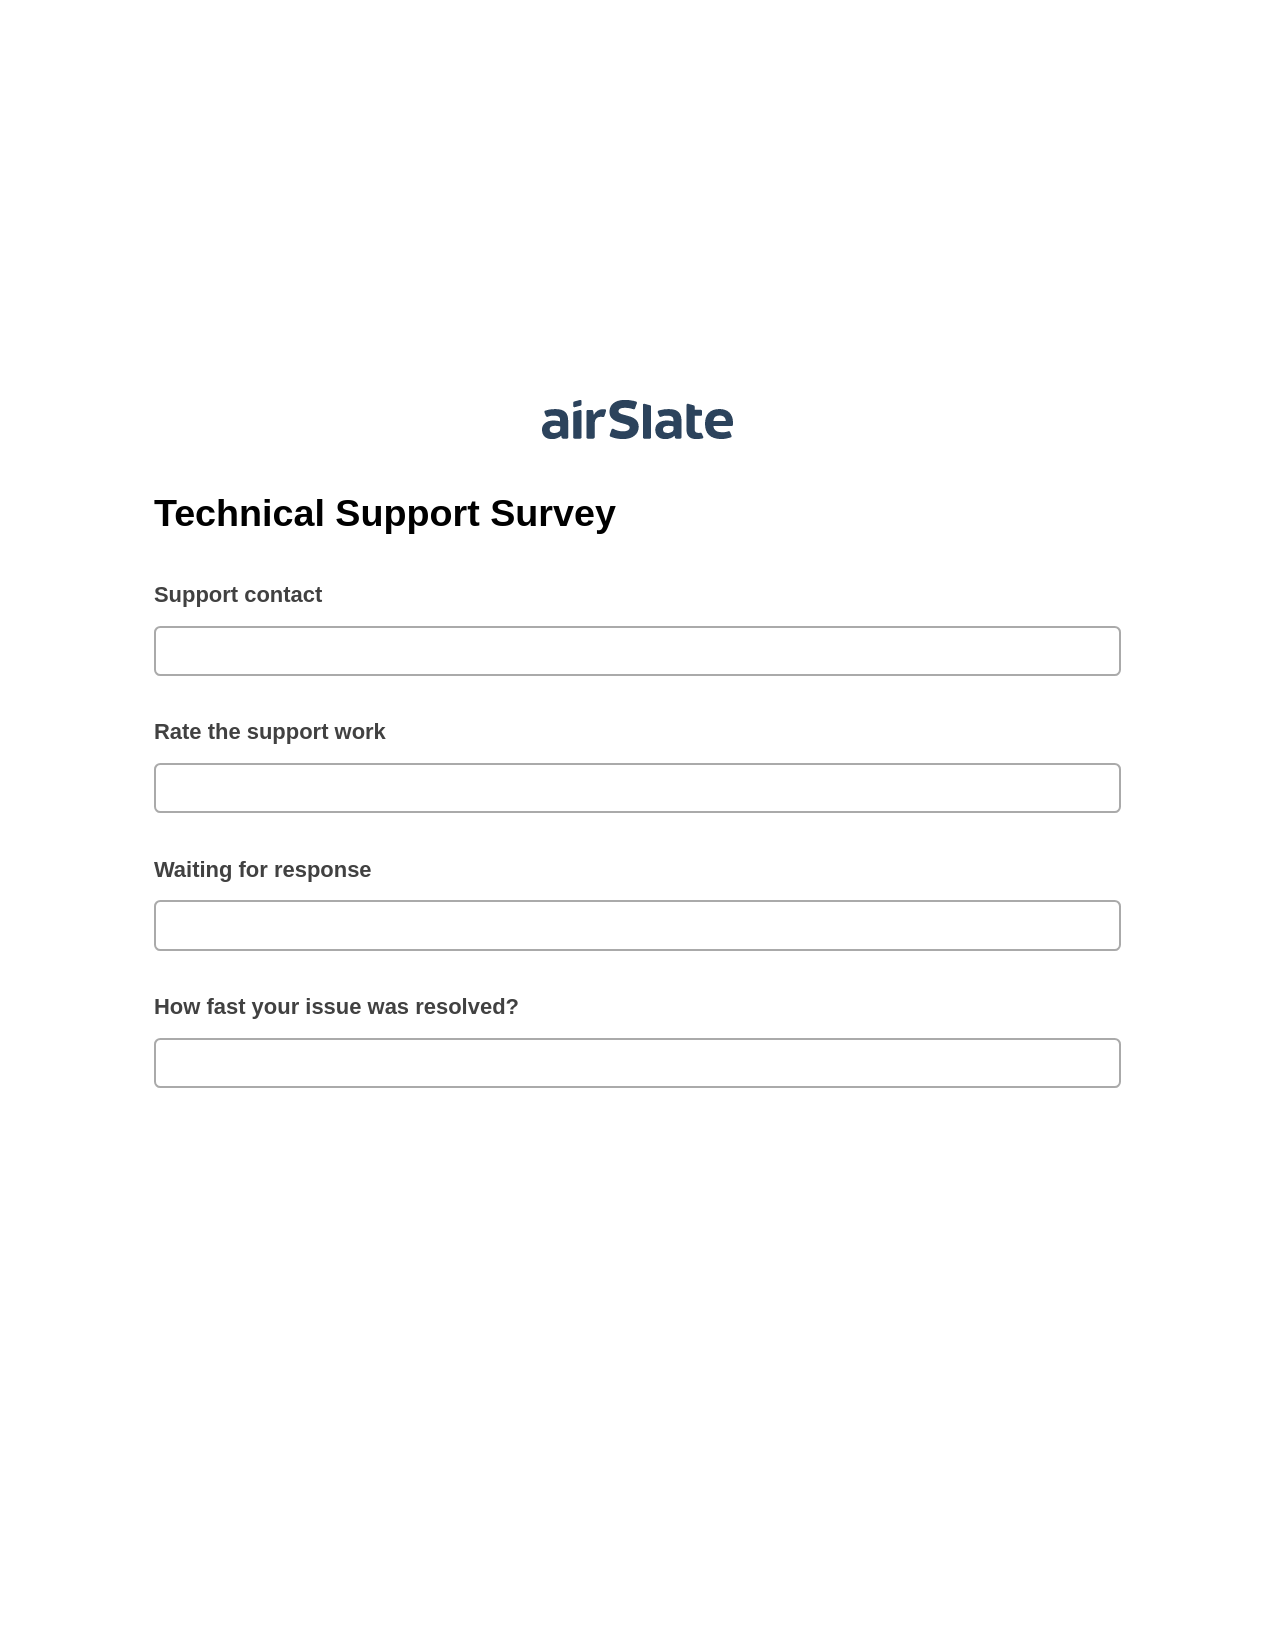 Technical Support Survey Pre-fill Document Bot, SendGrid send Campaign bot, Post-finish Document Bot